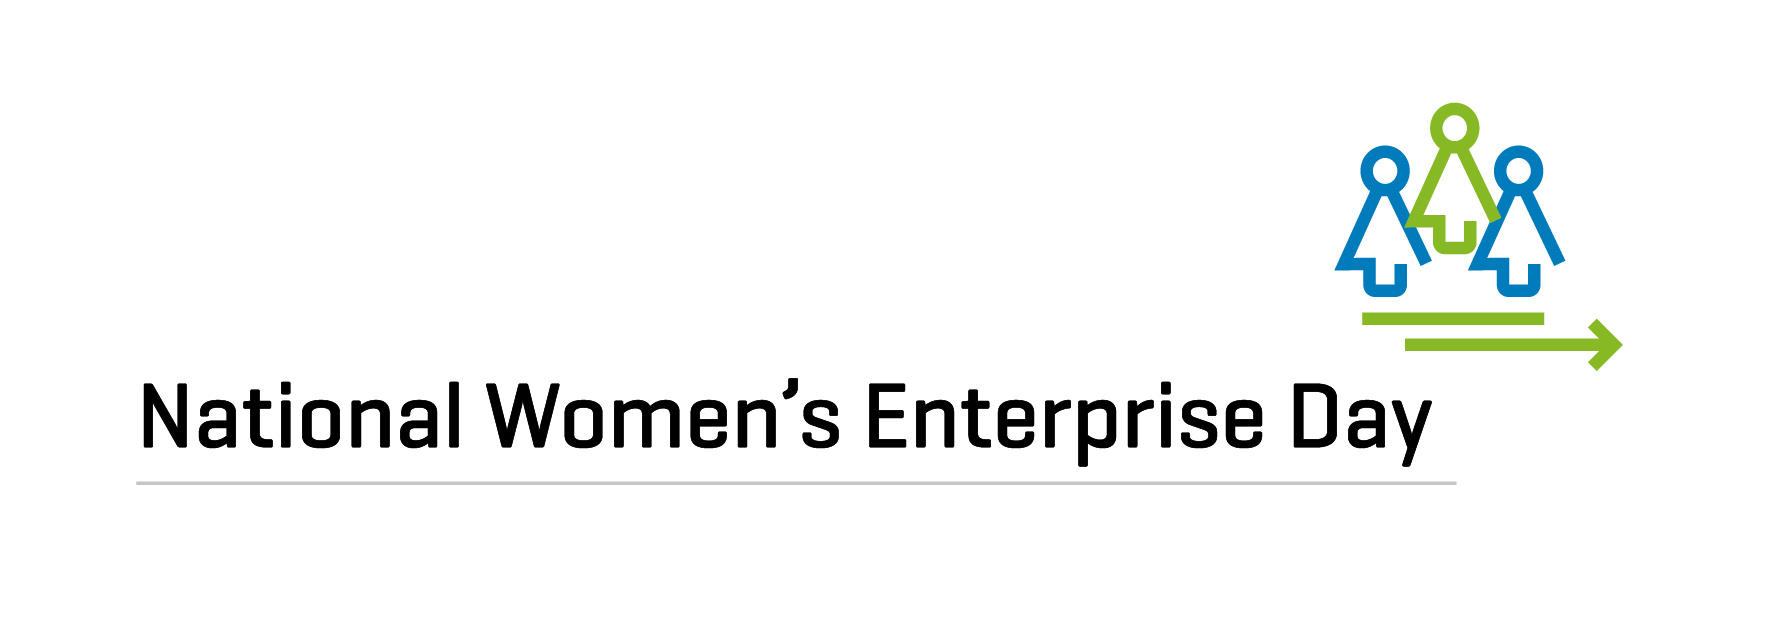 National Women's Enterprise Day 2018 Logo